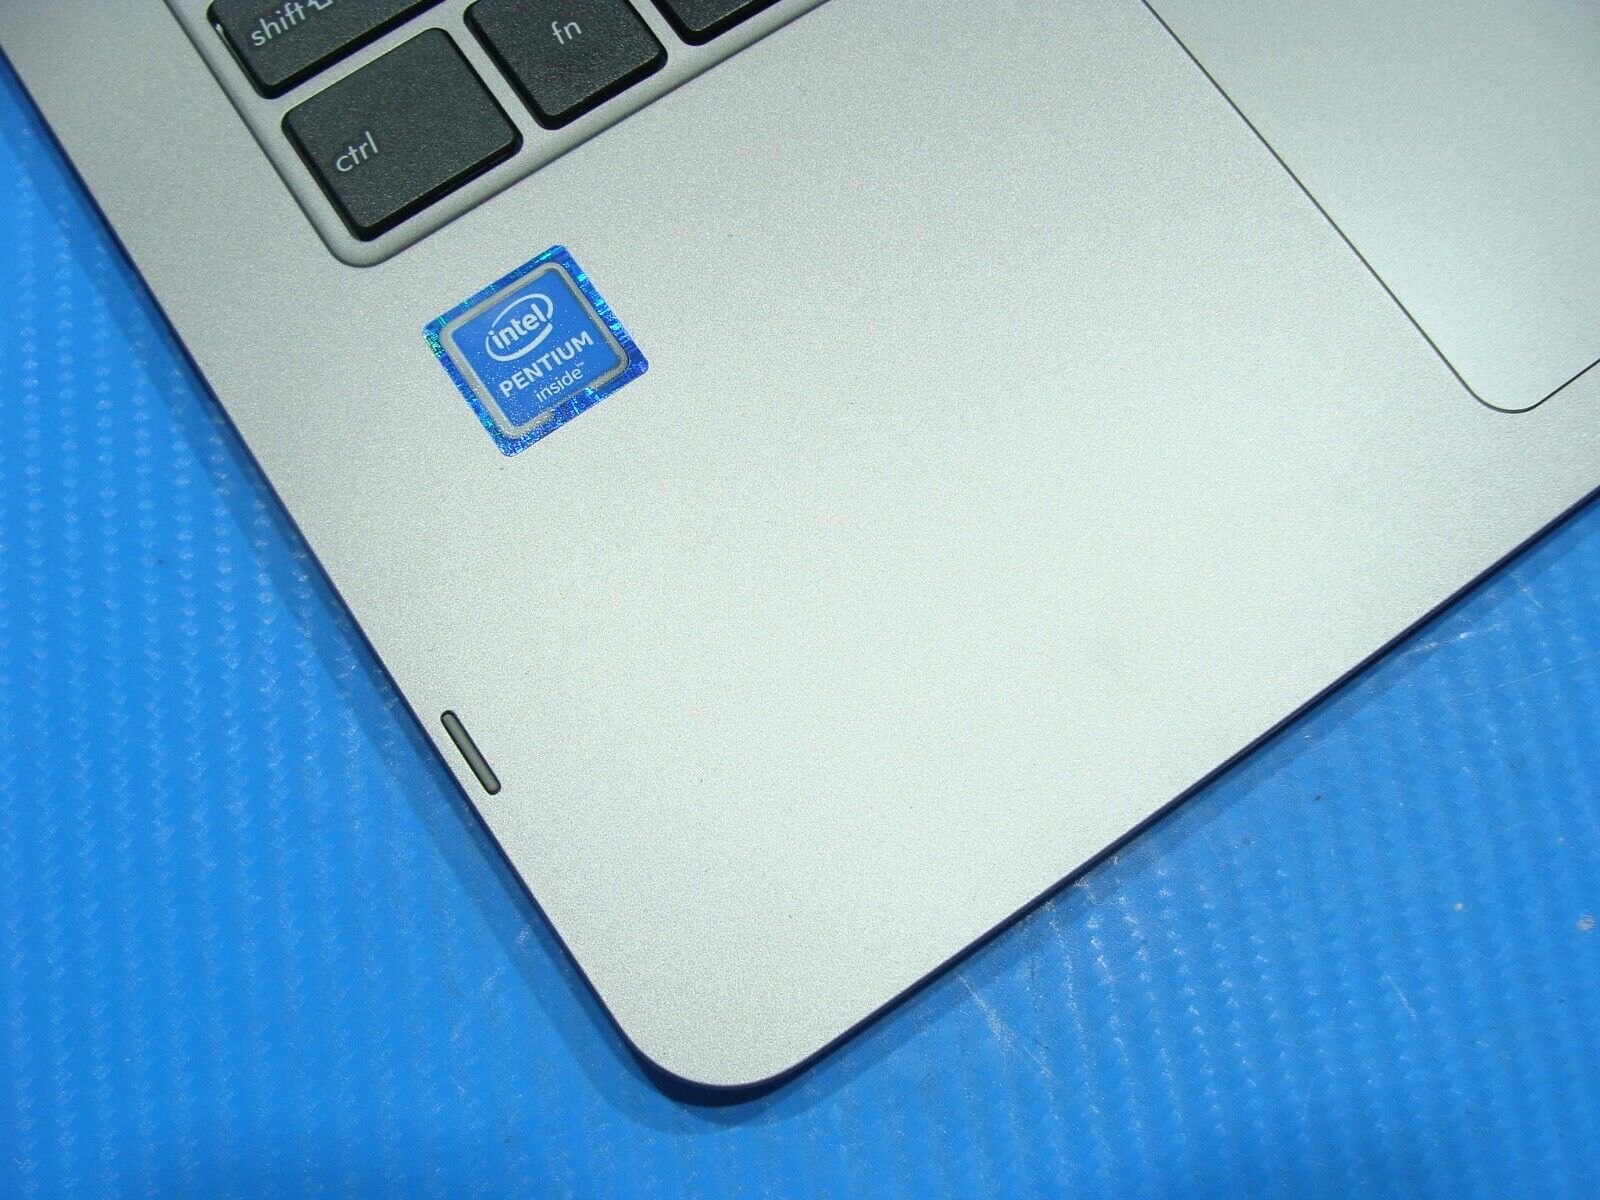 ASUS VivoBook Flip 14 TP401M 2-in-1 Laptop 14TOUCH Intel N5030 1.1GHz 4GB 128GB